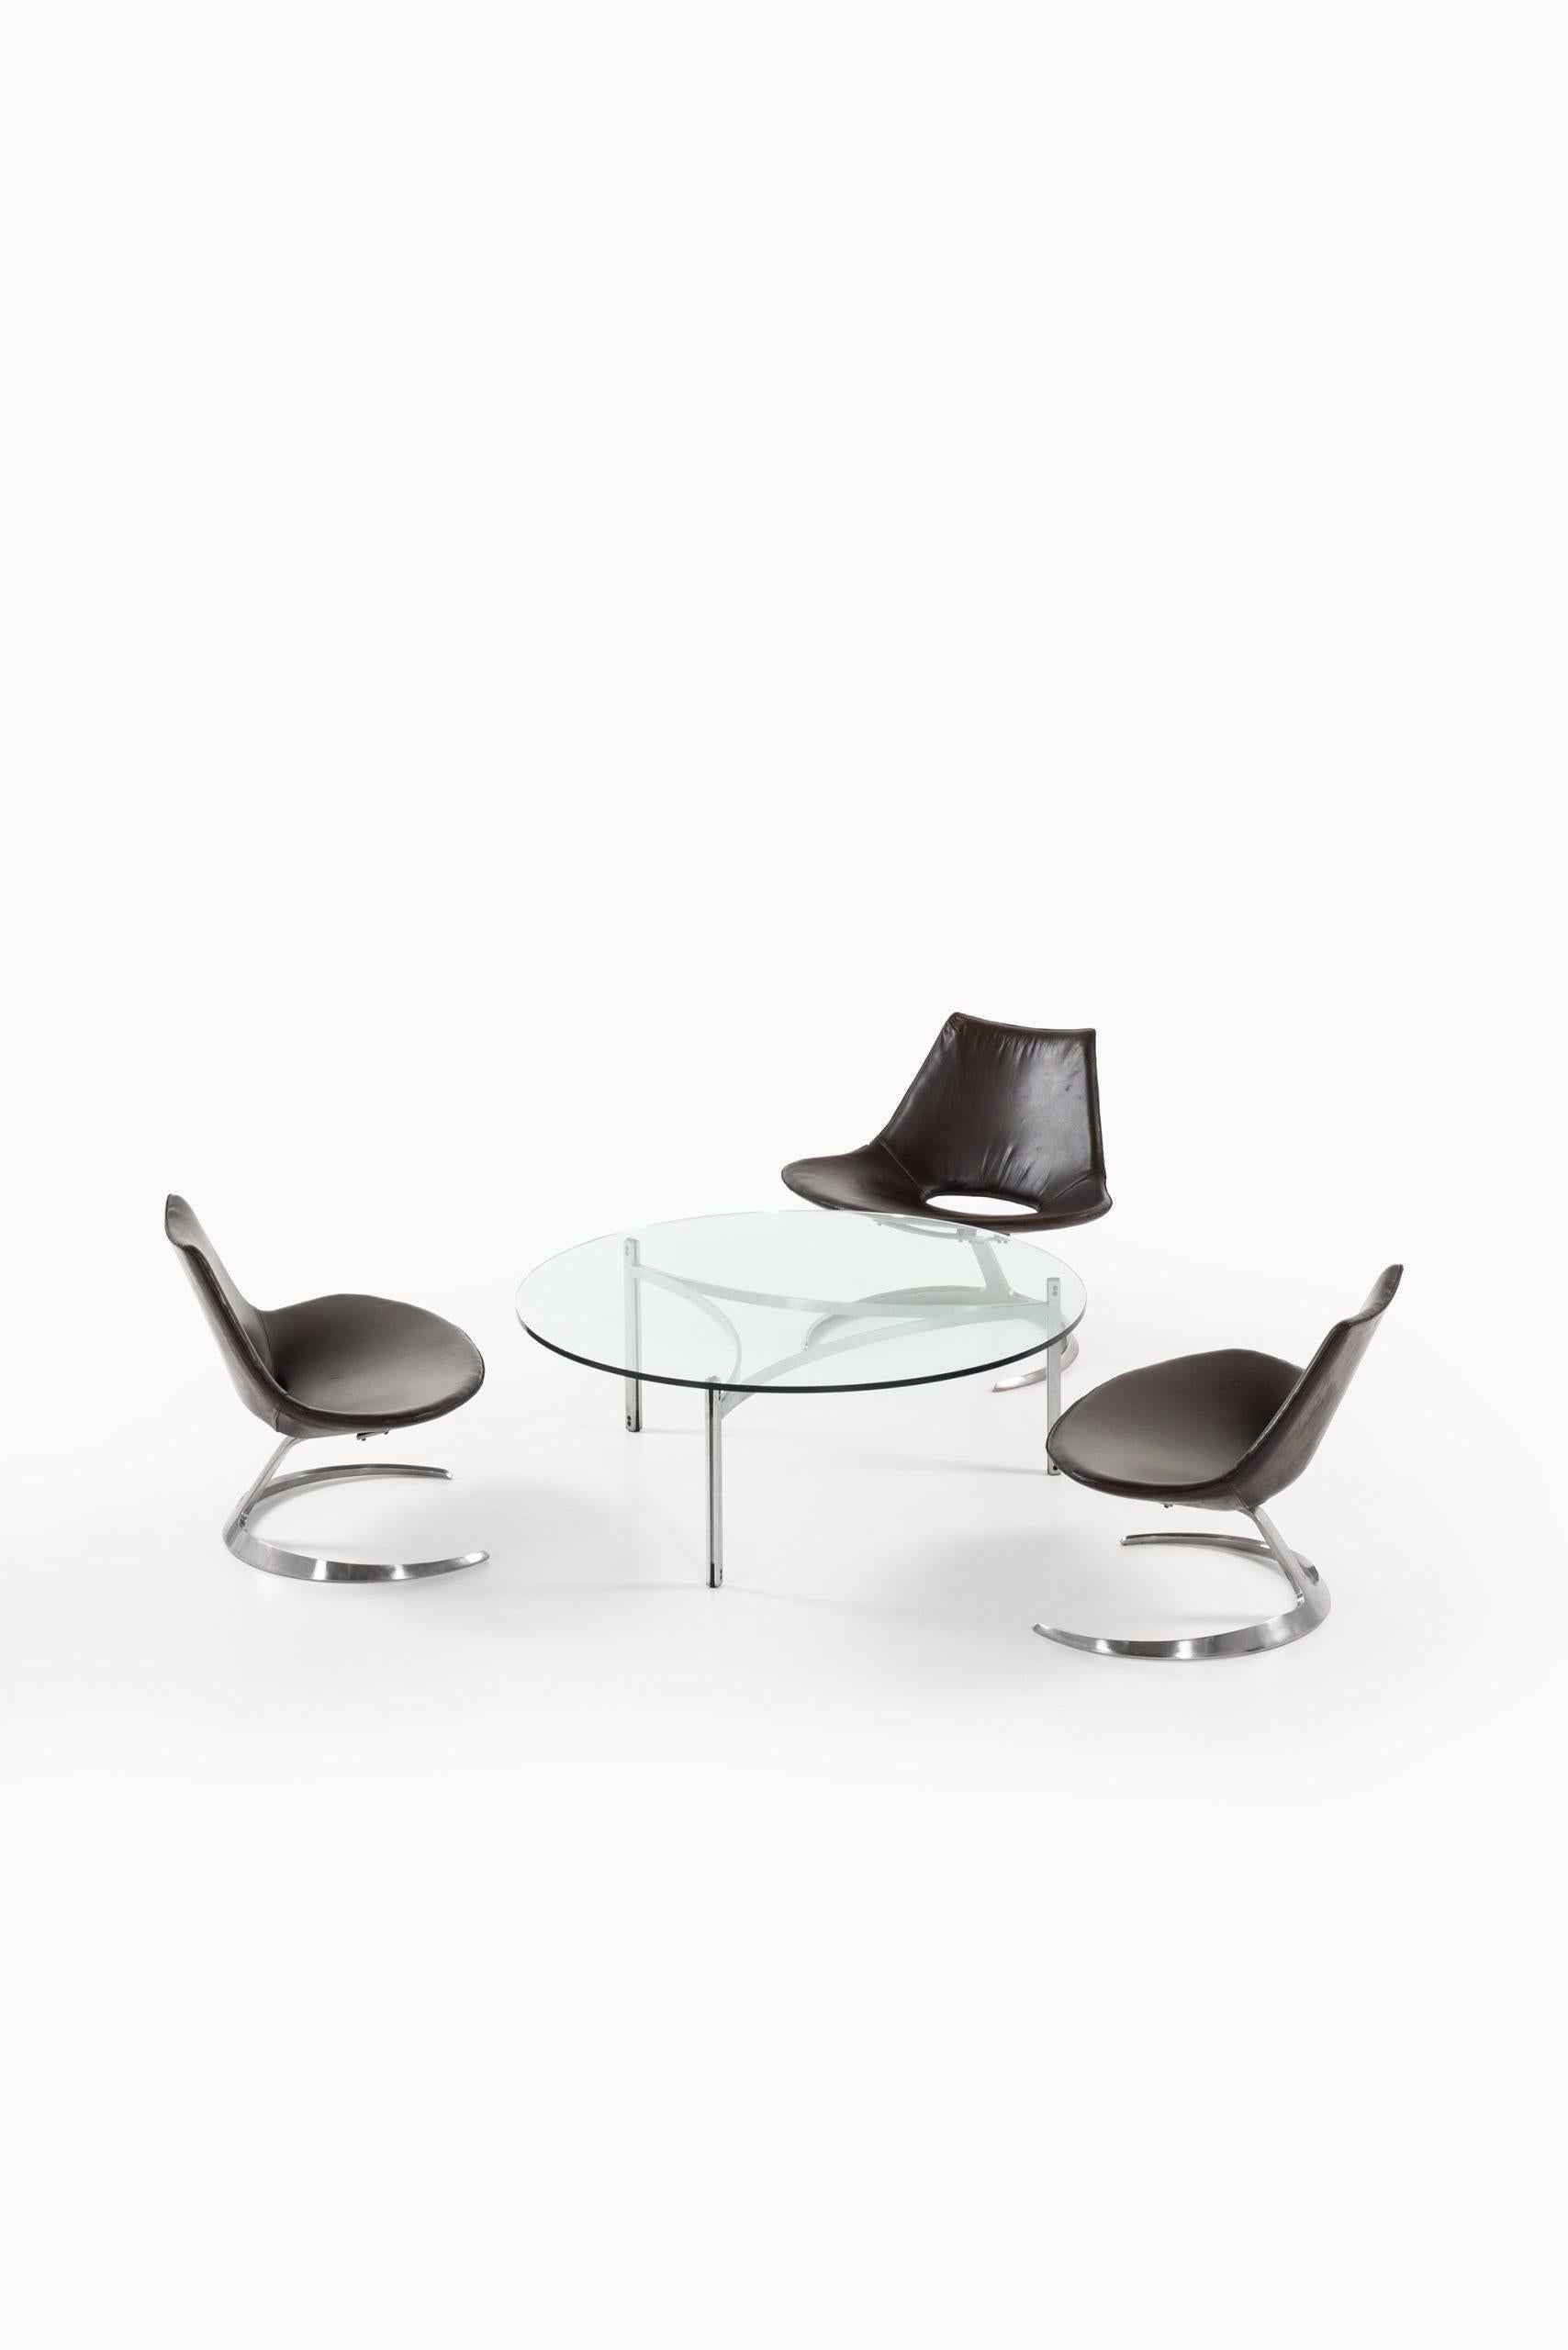 Scandinavian Modern Preben Fabricius & Jørgen Kastholm Seating Group by Ivan Schlecter in Denmark For Sale